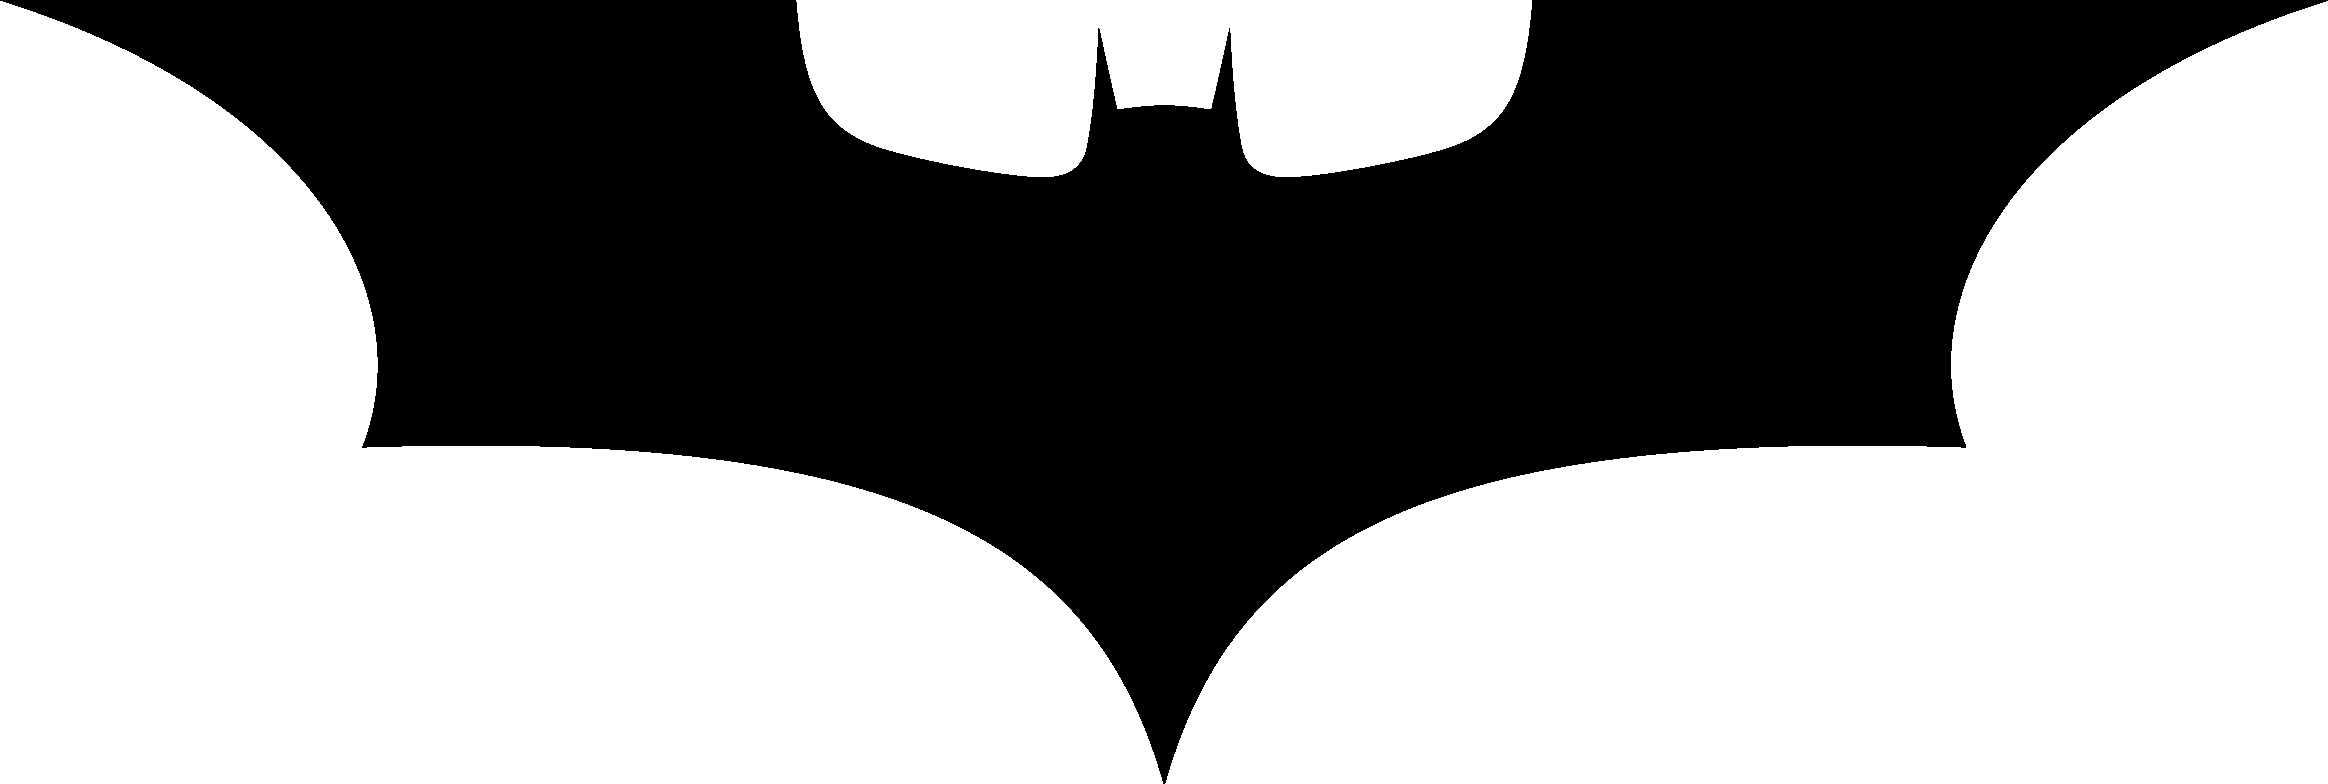 Batman Logo Black And White Batman begins. introduction